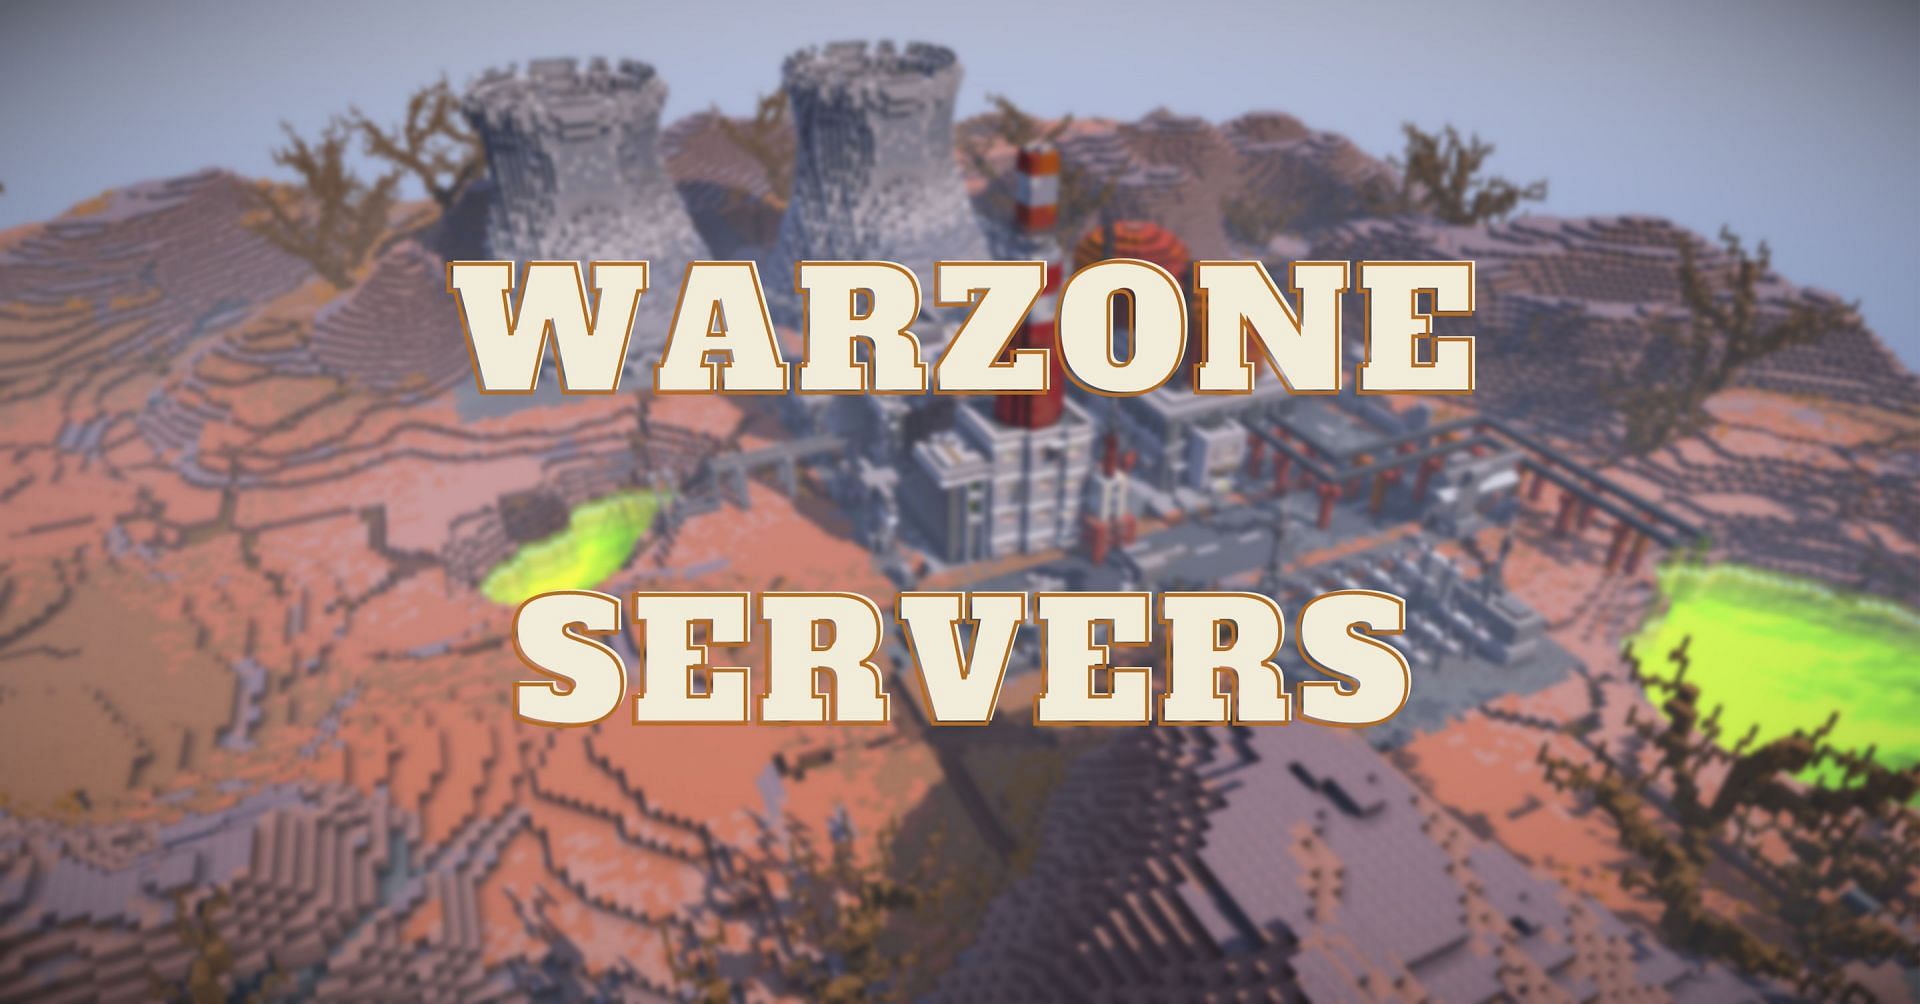 Warzone servers are intense but highly rewarding to play (Image via SpigotMC)